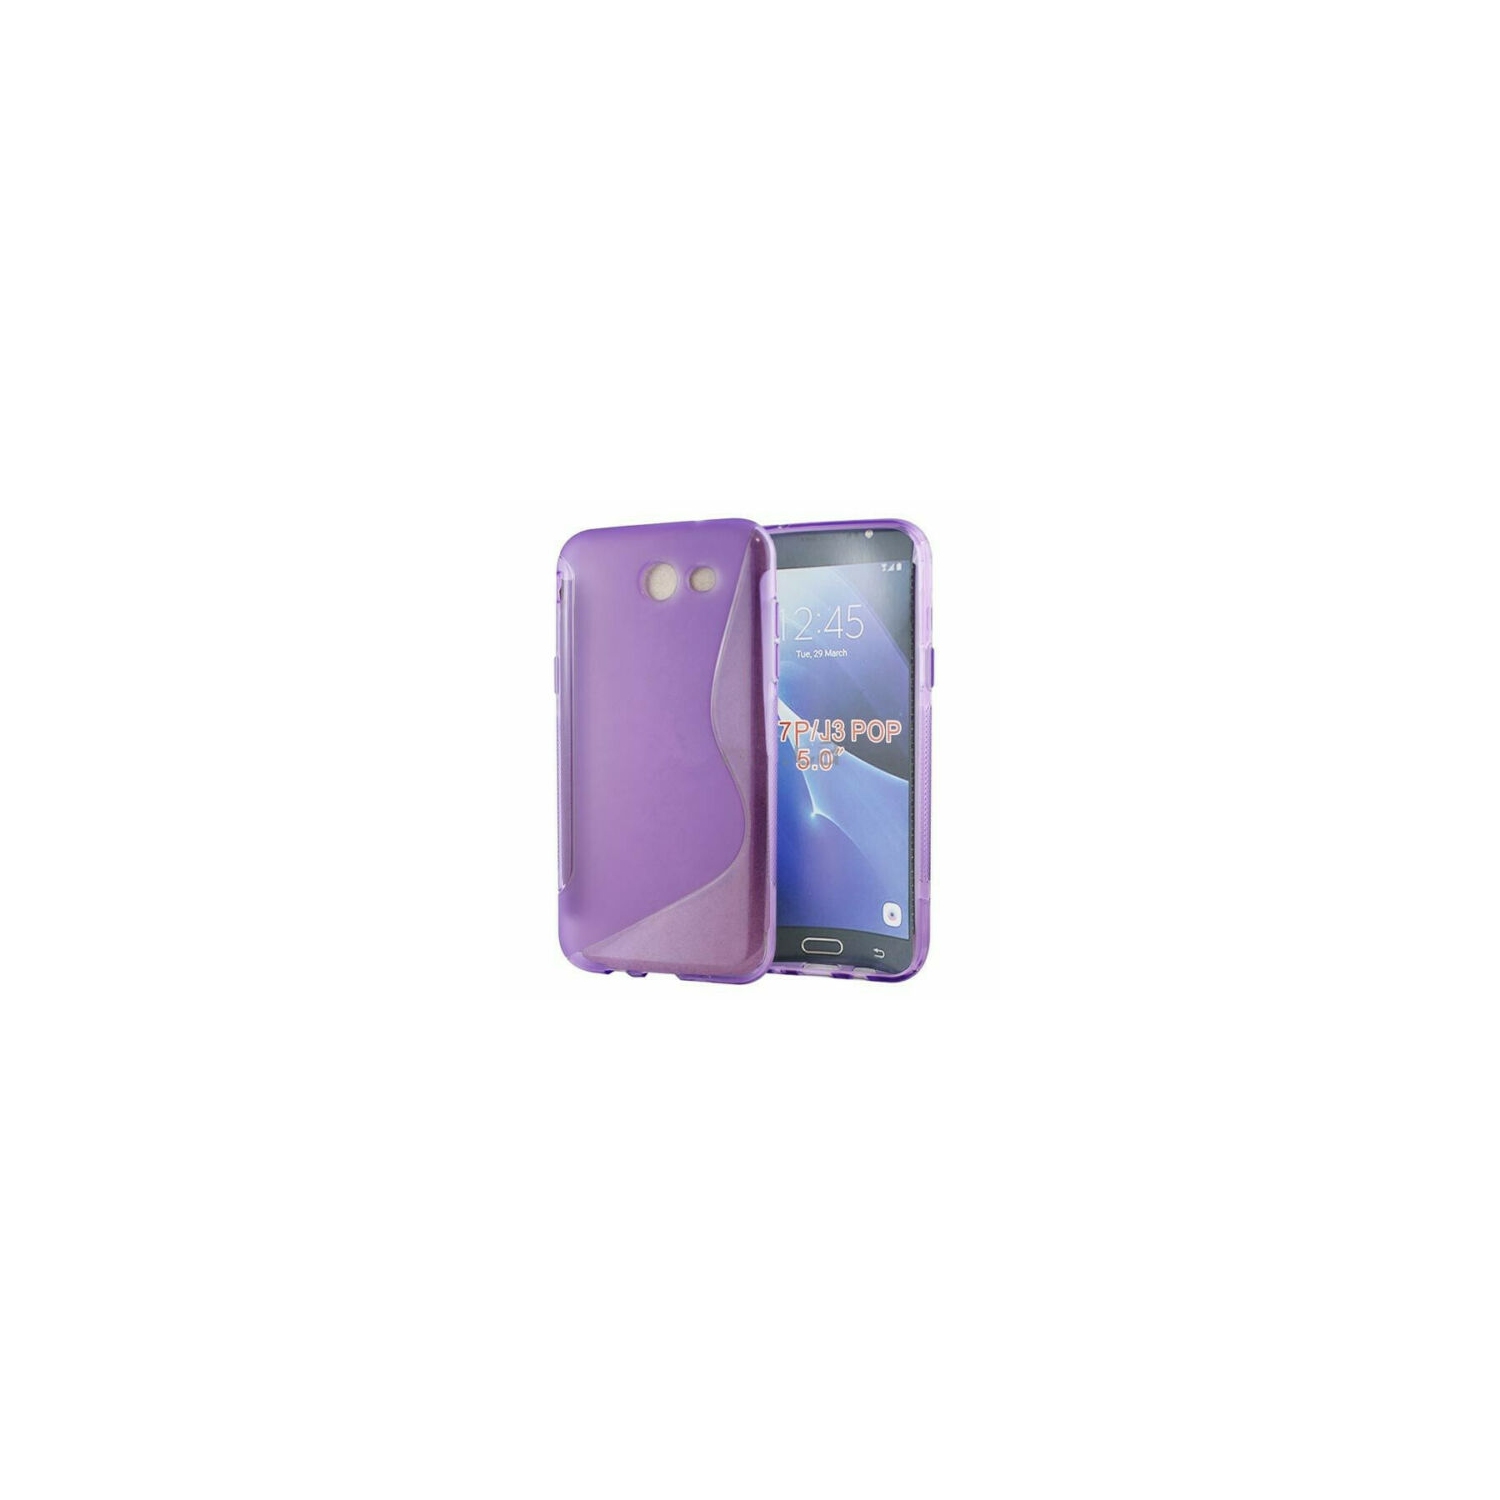 【CSmart】 Ultra Thin Soft TPU Silicone Jelly Bumper Back Cover Case for Samsung Galaxy J3 Prime / J3 2017, Purple